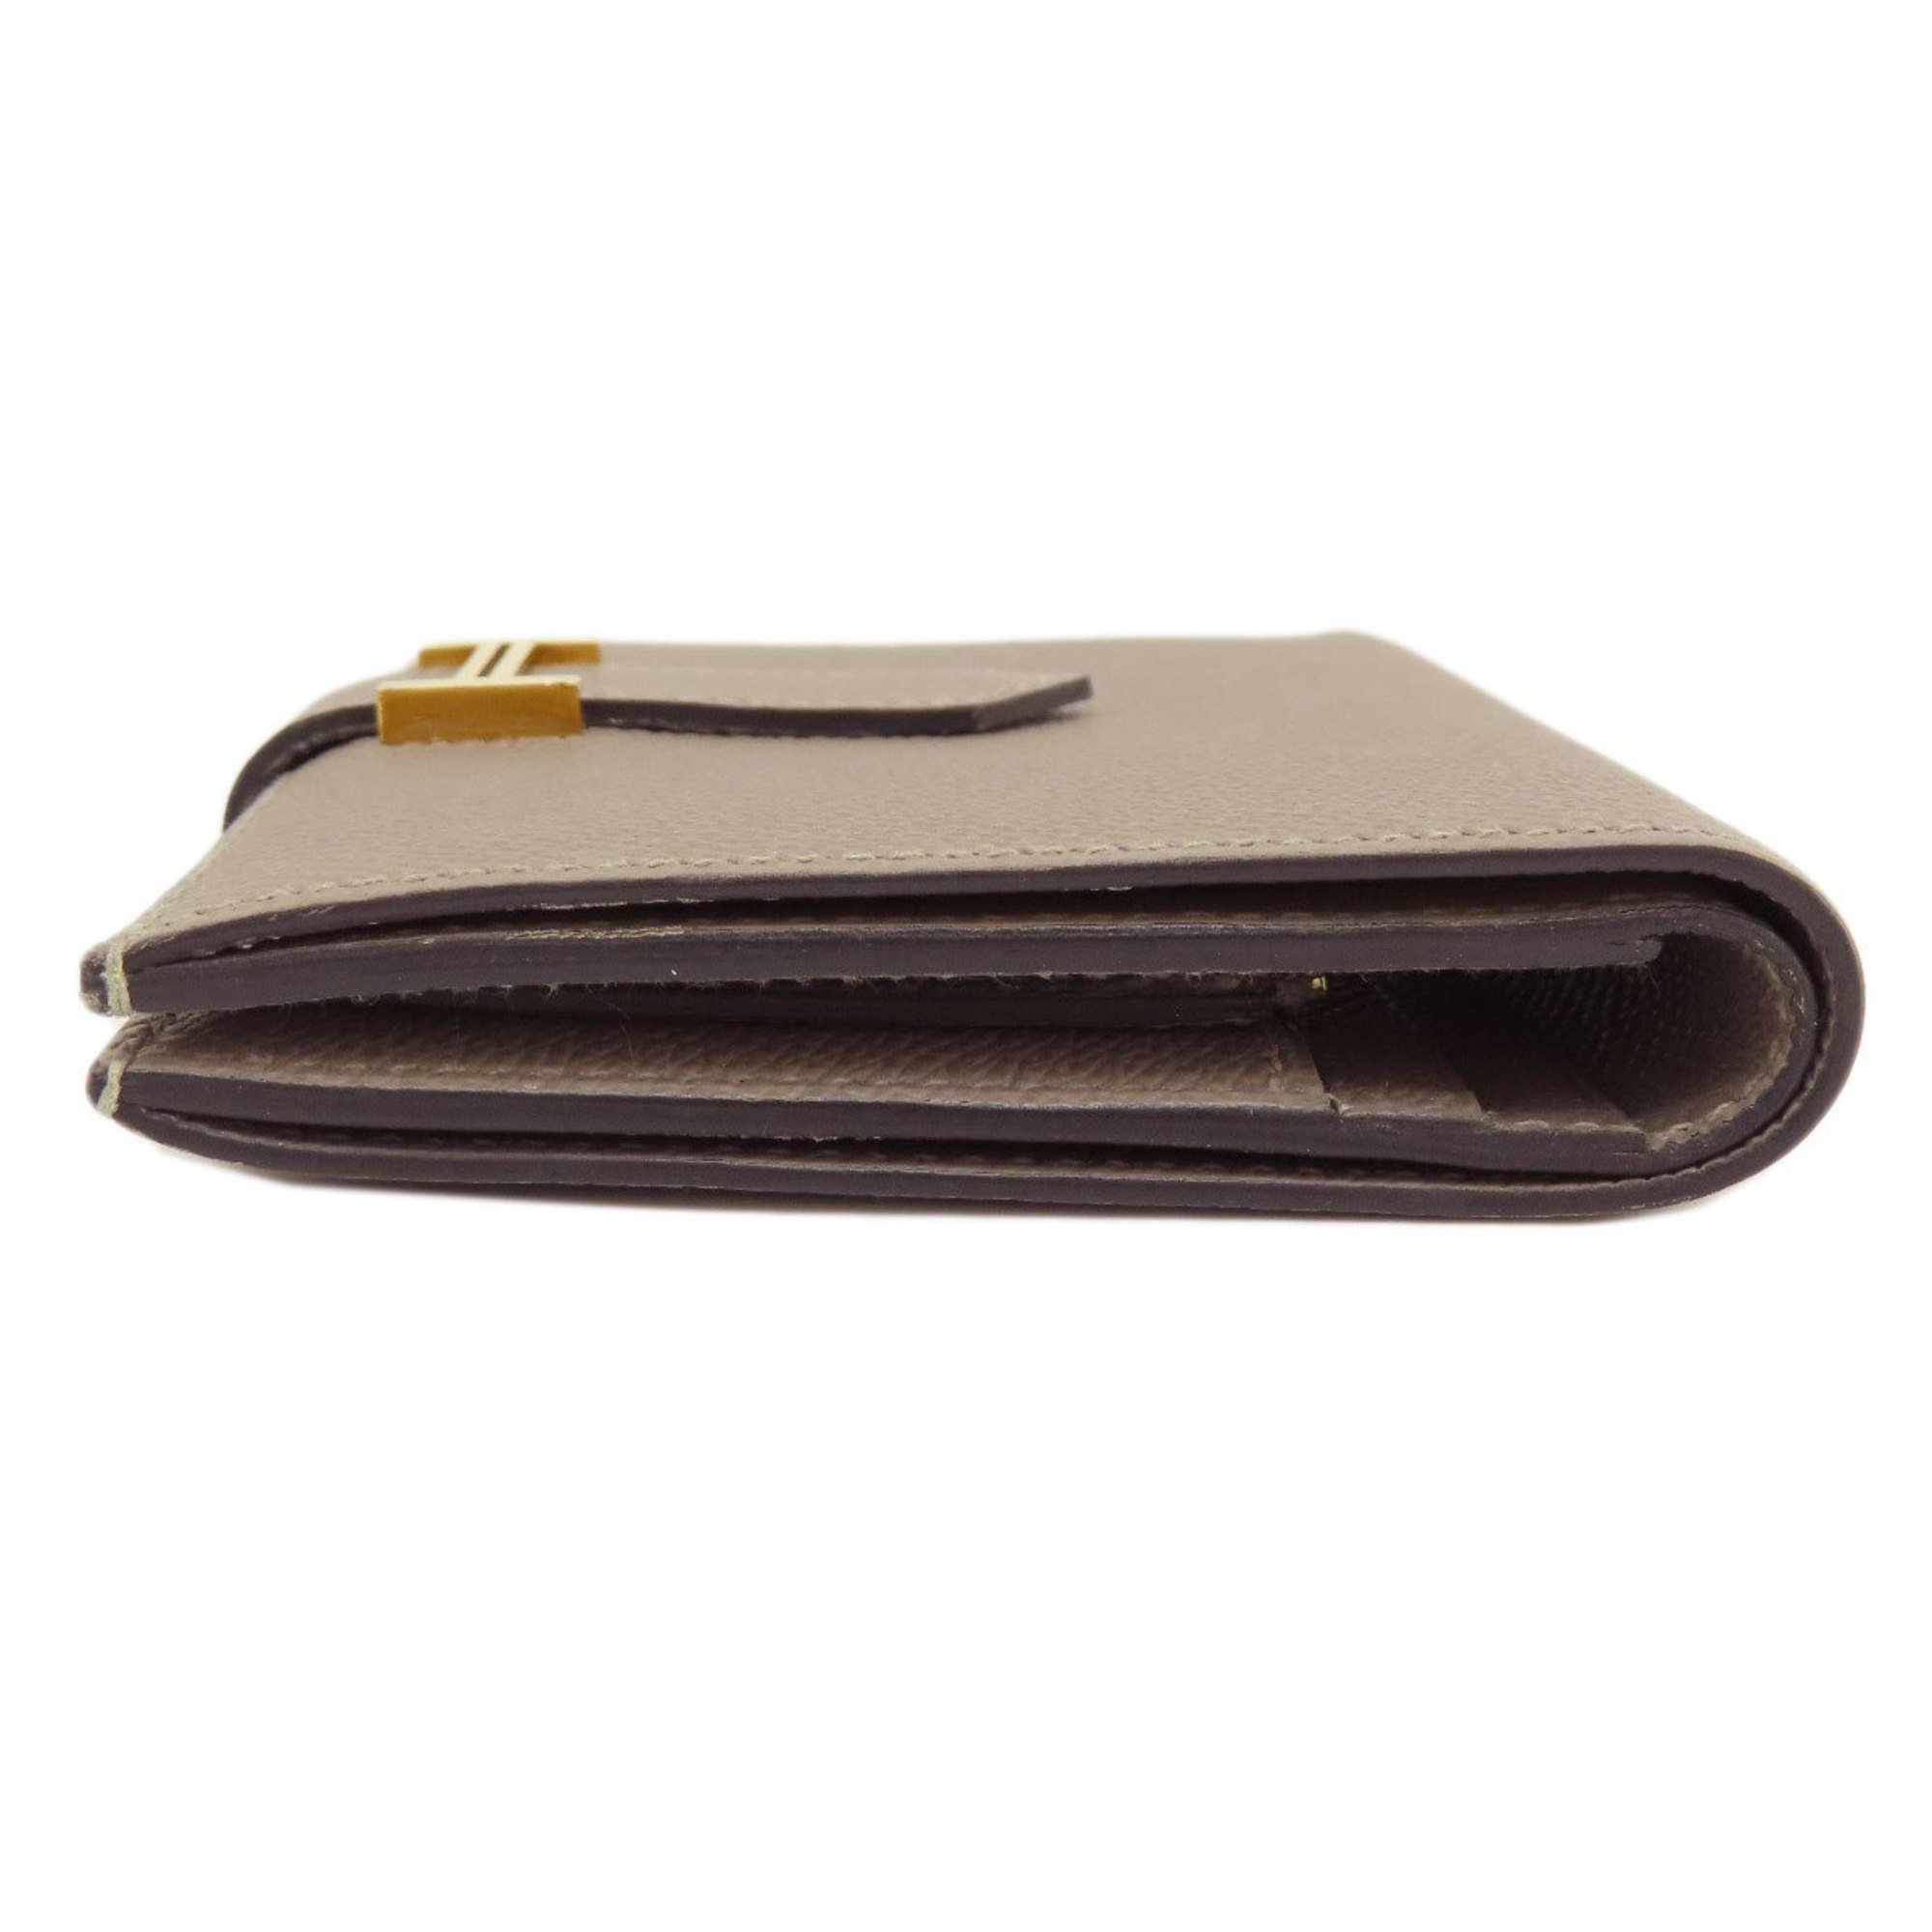 Hermes Bearn Compact Grisphalt Long Wallet Epson Women's